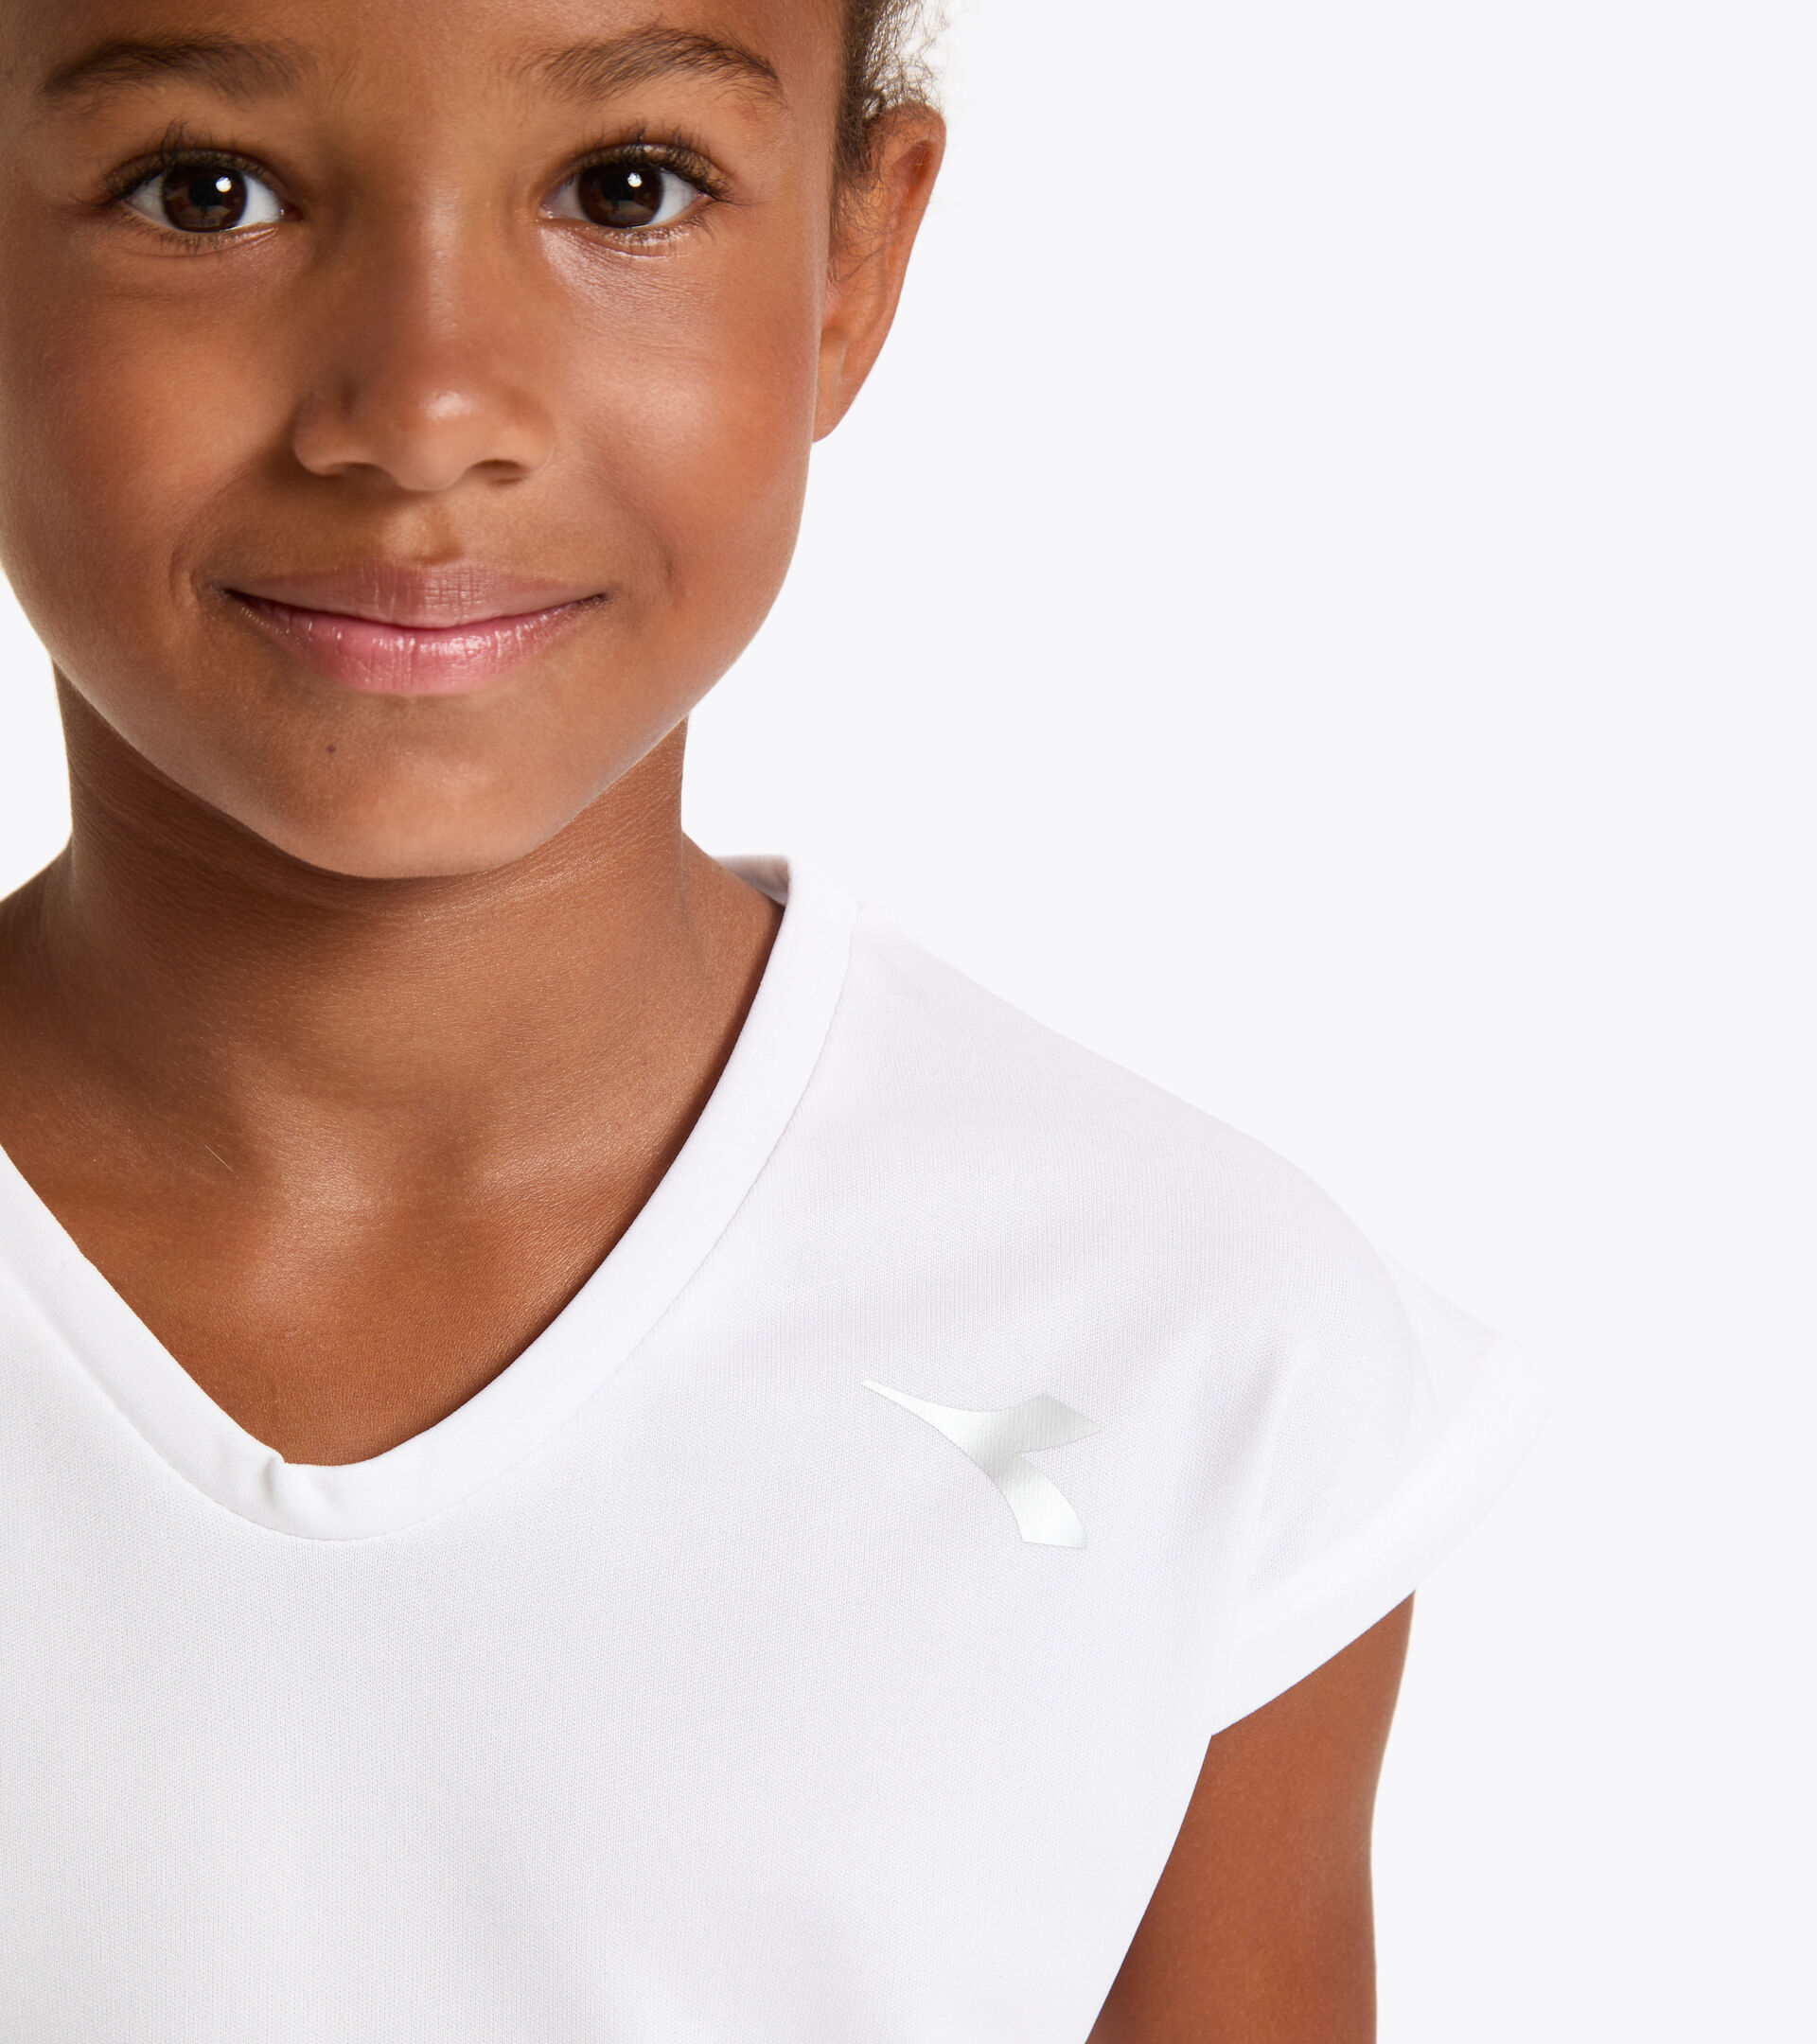 T-shirt de tennis - Junior G. T-SHIRT TEAM BLANC VIF - Diadora